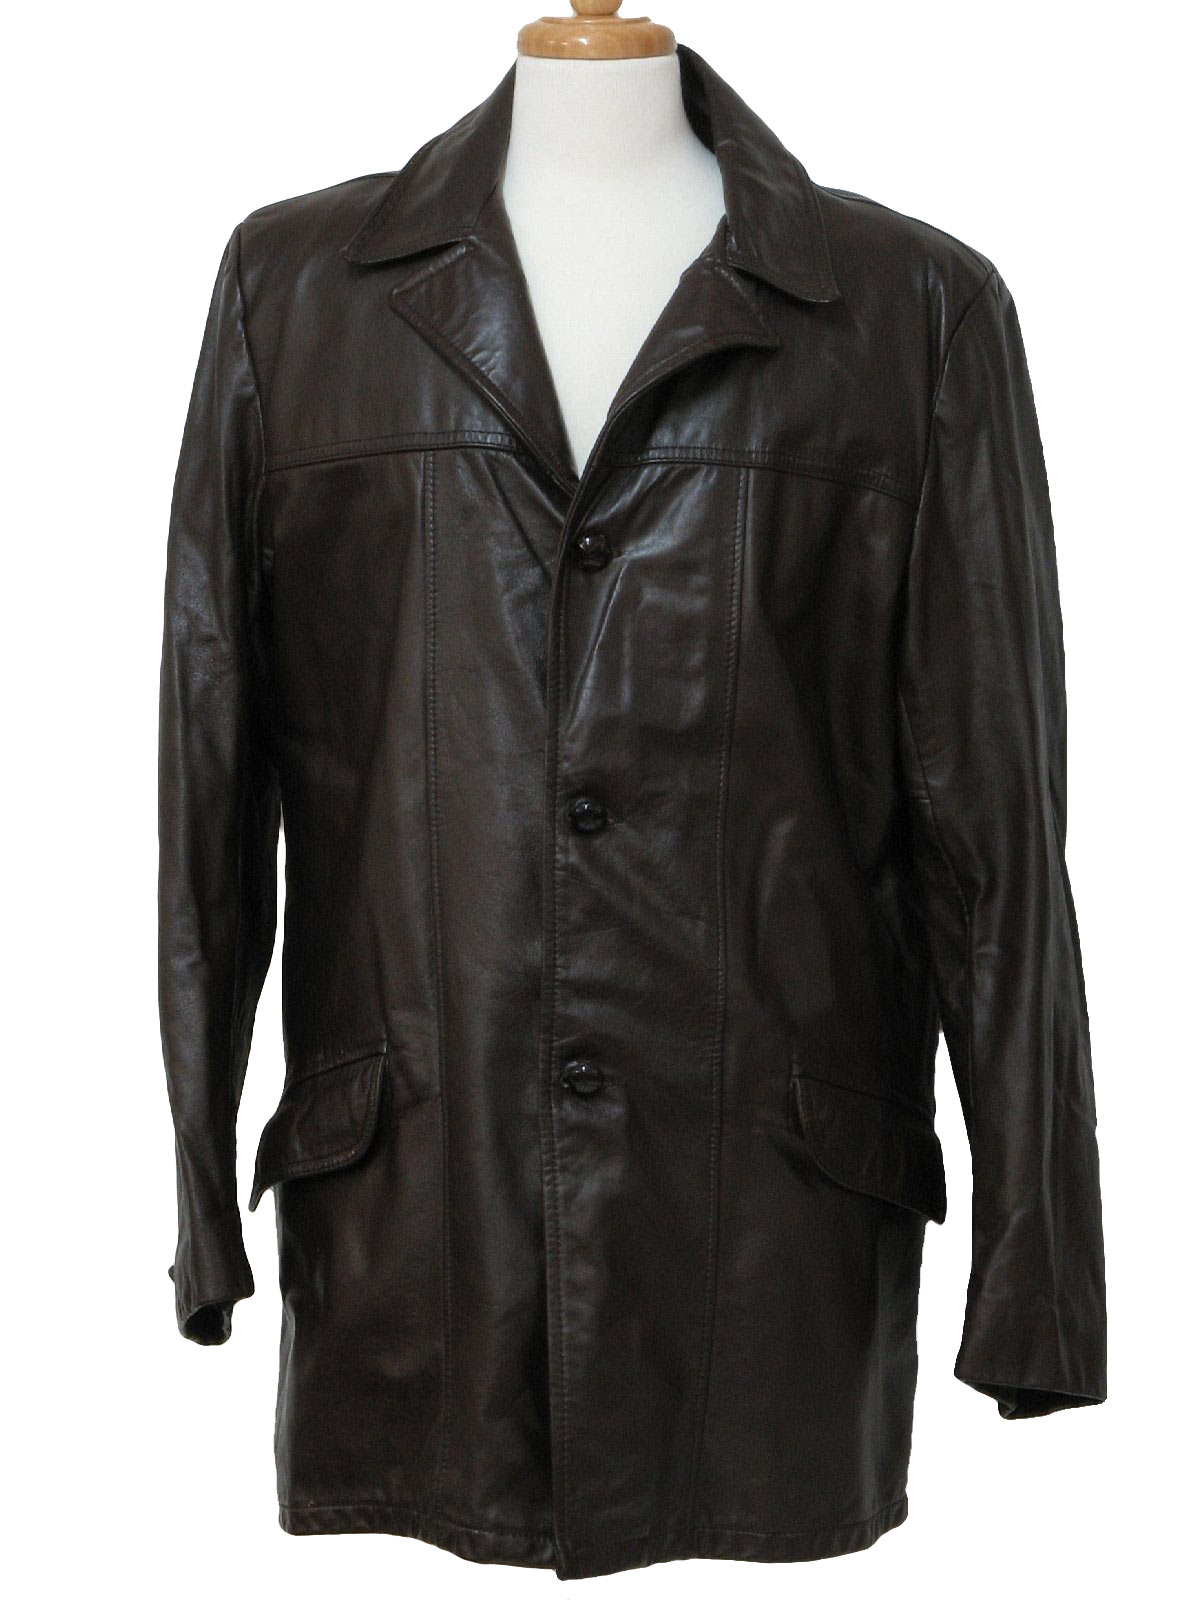 Retro 70s Leather Jacket (Genuine Leather) : 70s -Genuine Leather- Mens ...